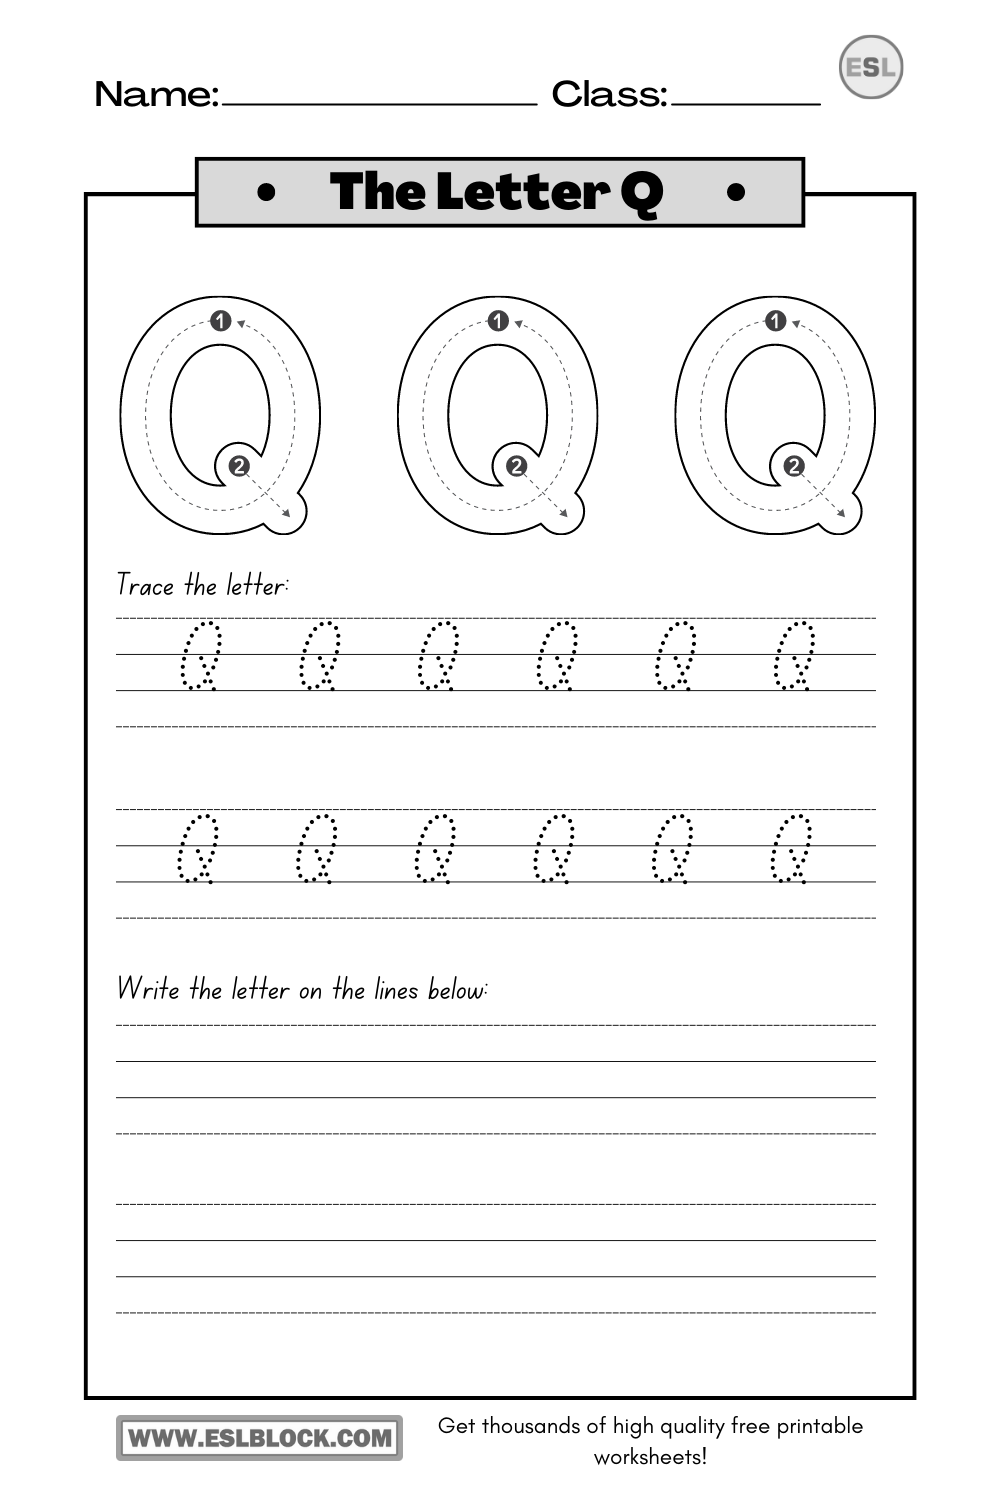 Alphabet Q Printable Worksheets, Free Worksheets, Kindergarten Worksheets, Letter Q Printable Worksheets, Preschool Worksheets, Tracing the Letter Q, Tracing the letter Q Printable, Tracing the Letter Q Worksheets, Tracing Worksheets, Worksheets